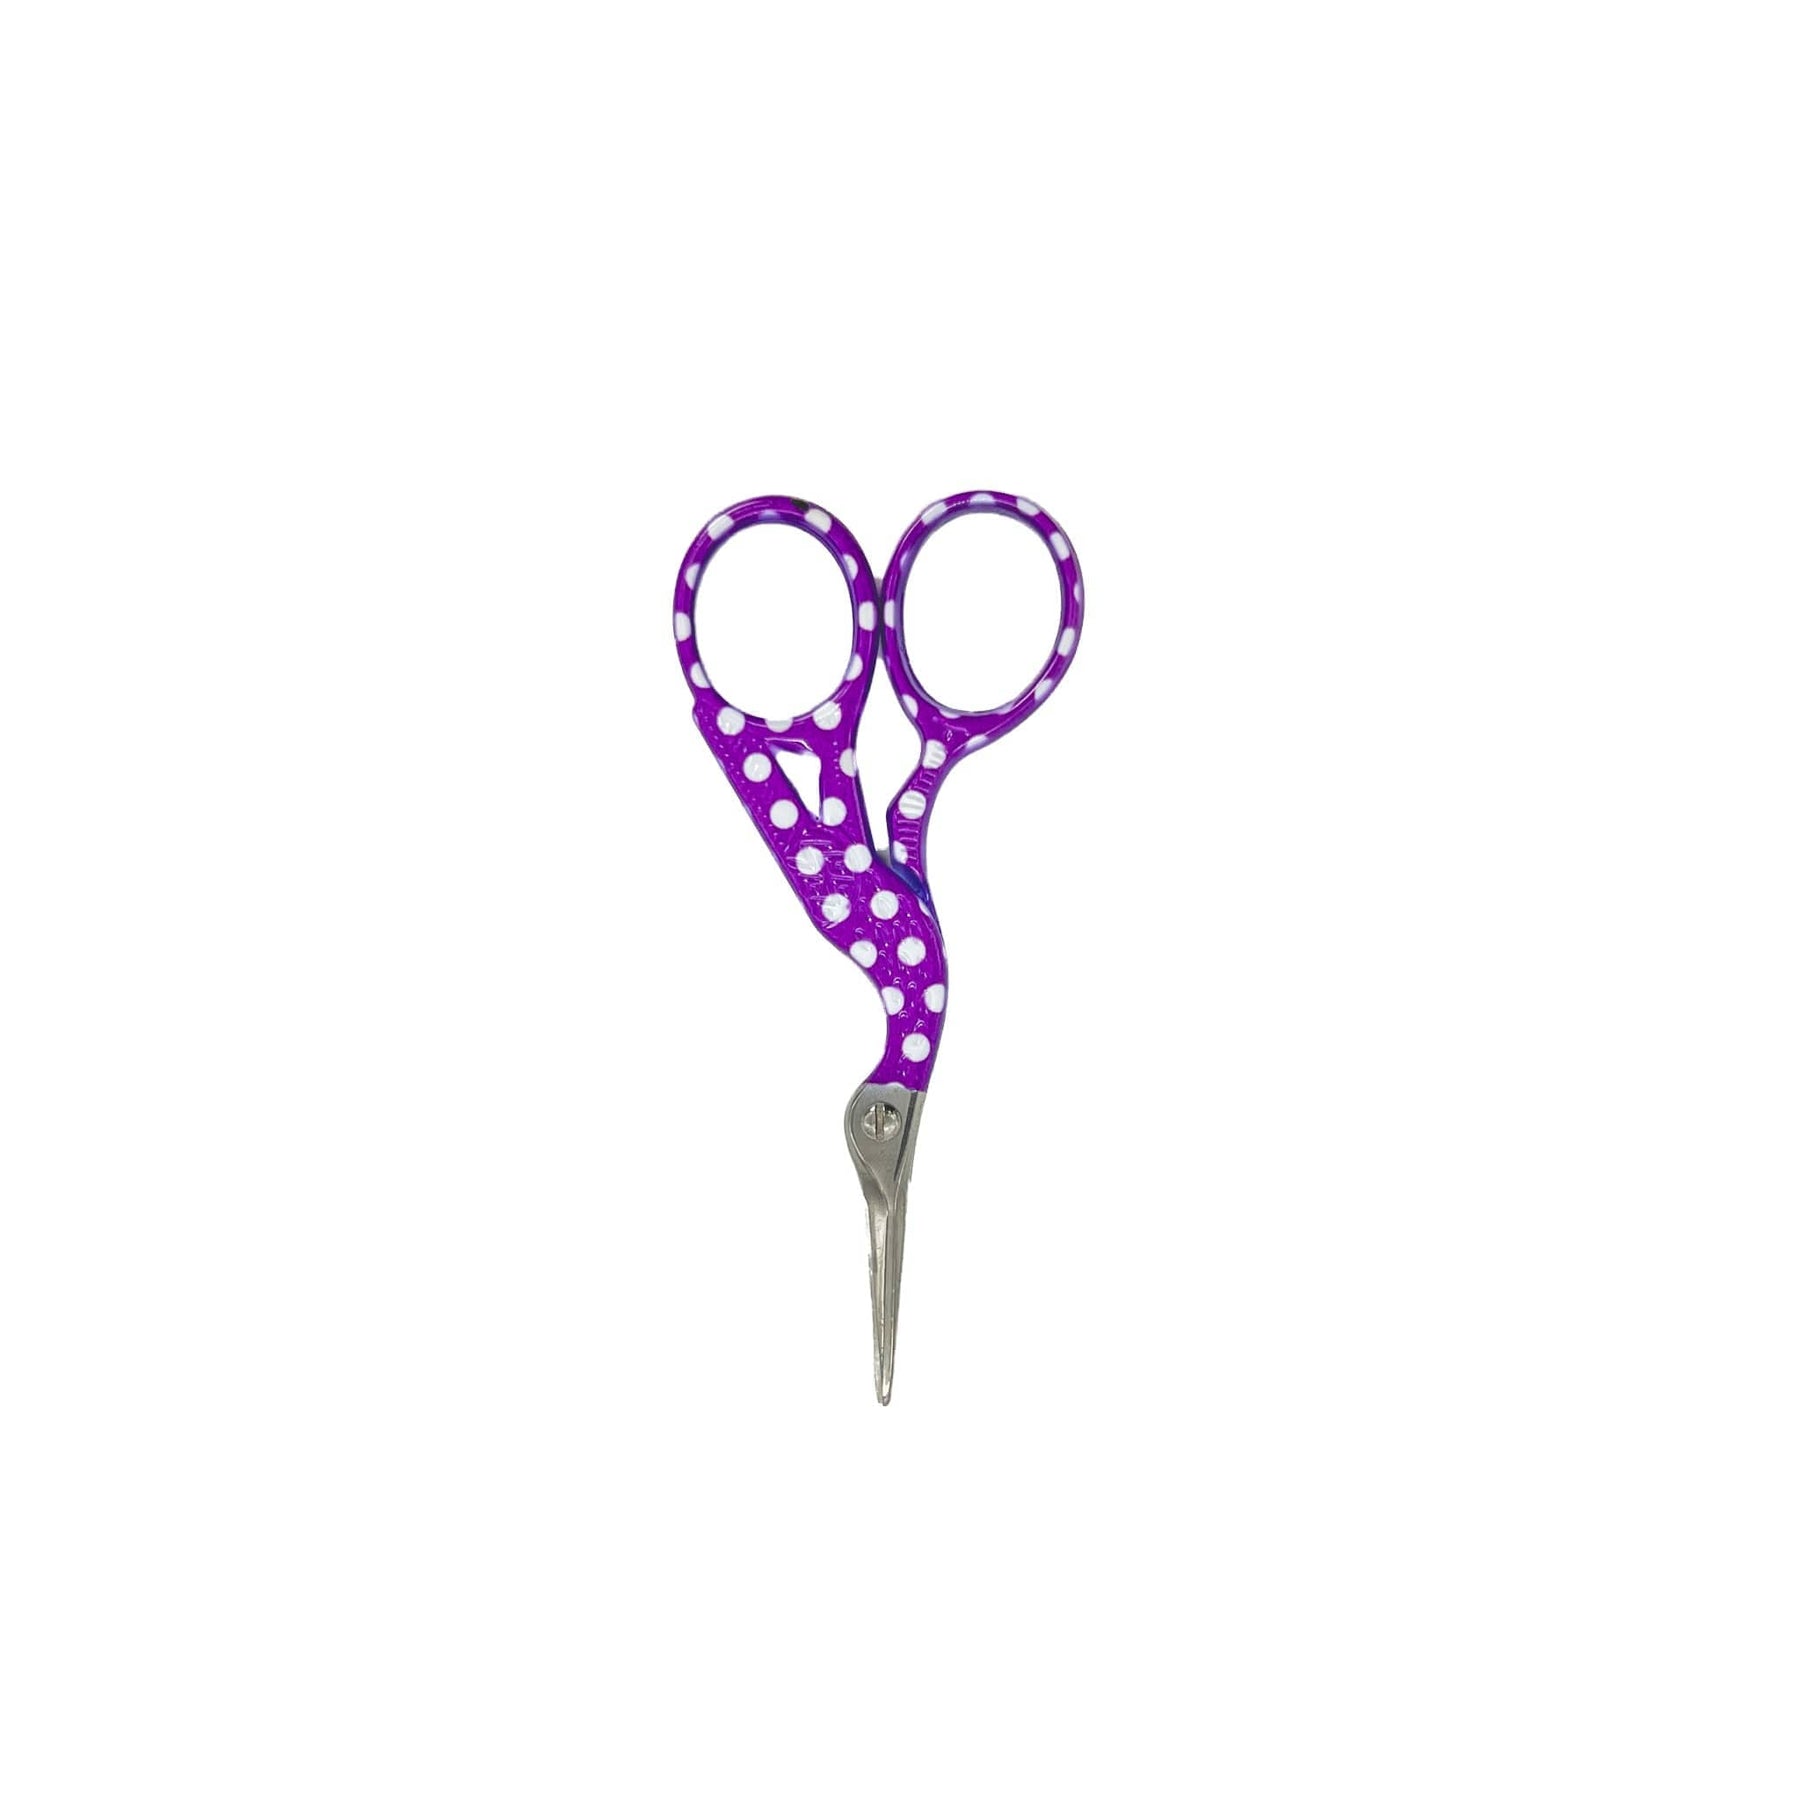 Embroidery scissors 91mm sewing scissors crochet knitting tools Quality  scissor